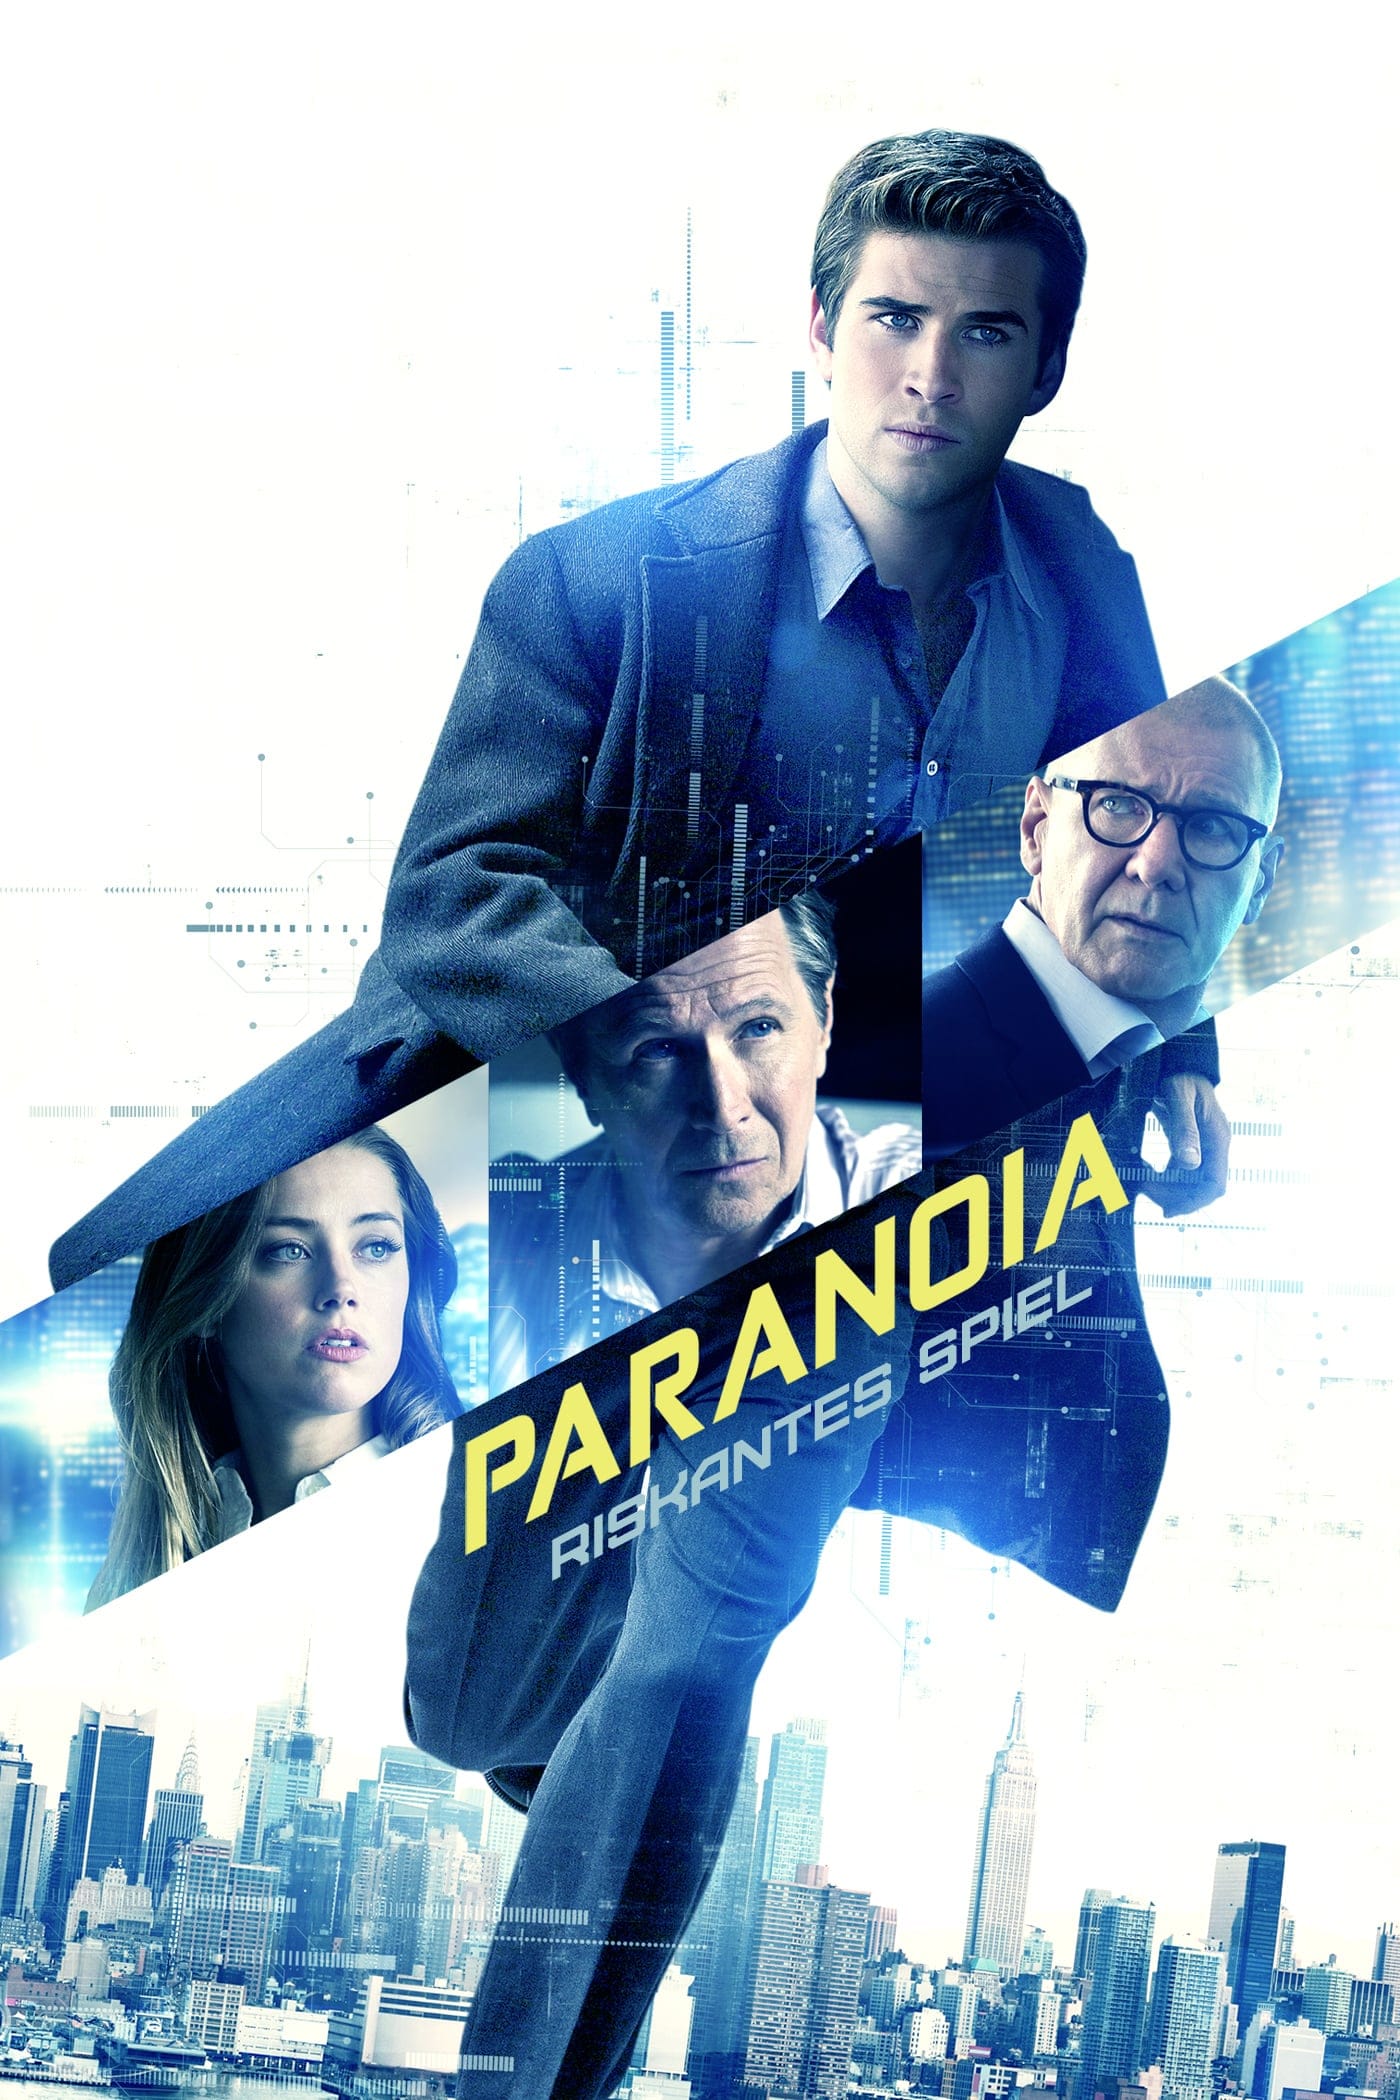 Plakat von "Paranoia - Riskantes Spiel"